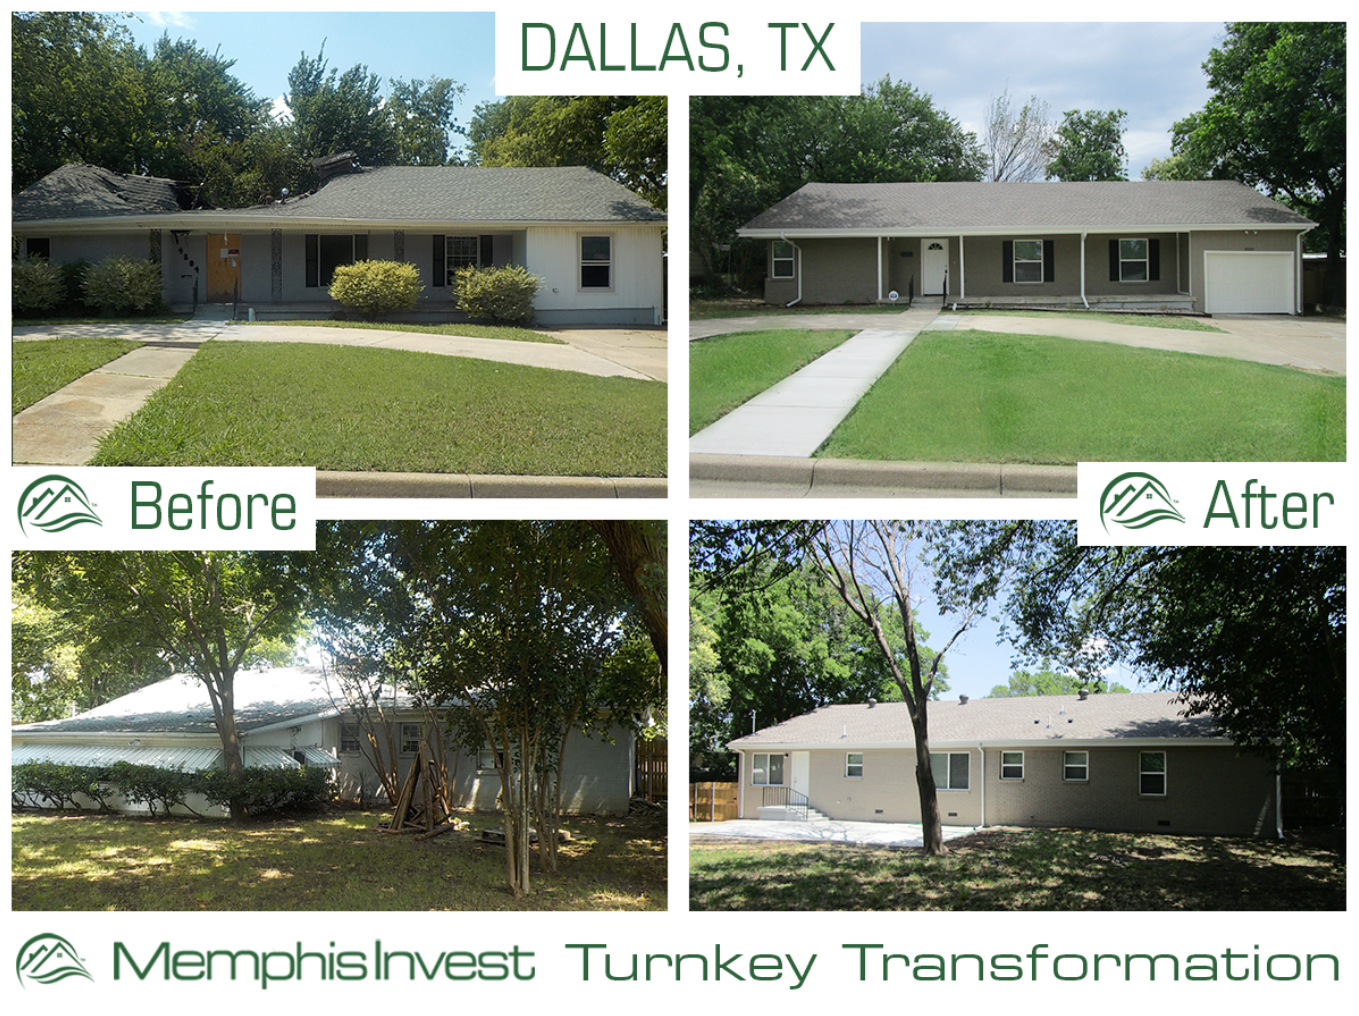 Turnkey-Renovation-Memphis-Invest-Dallas